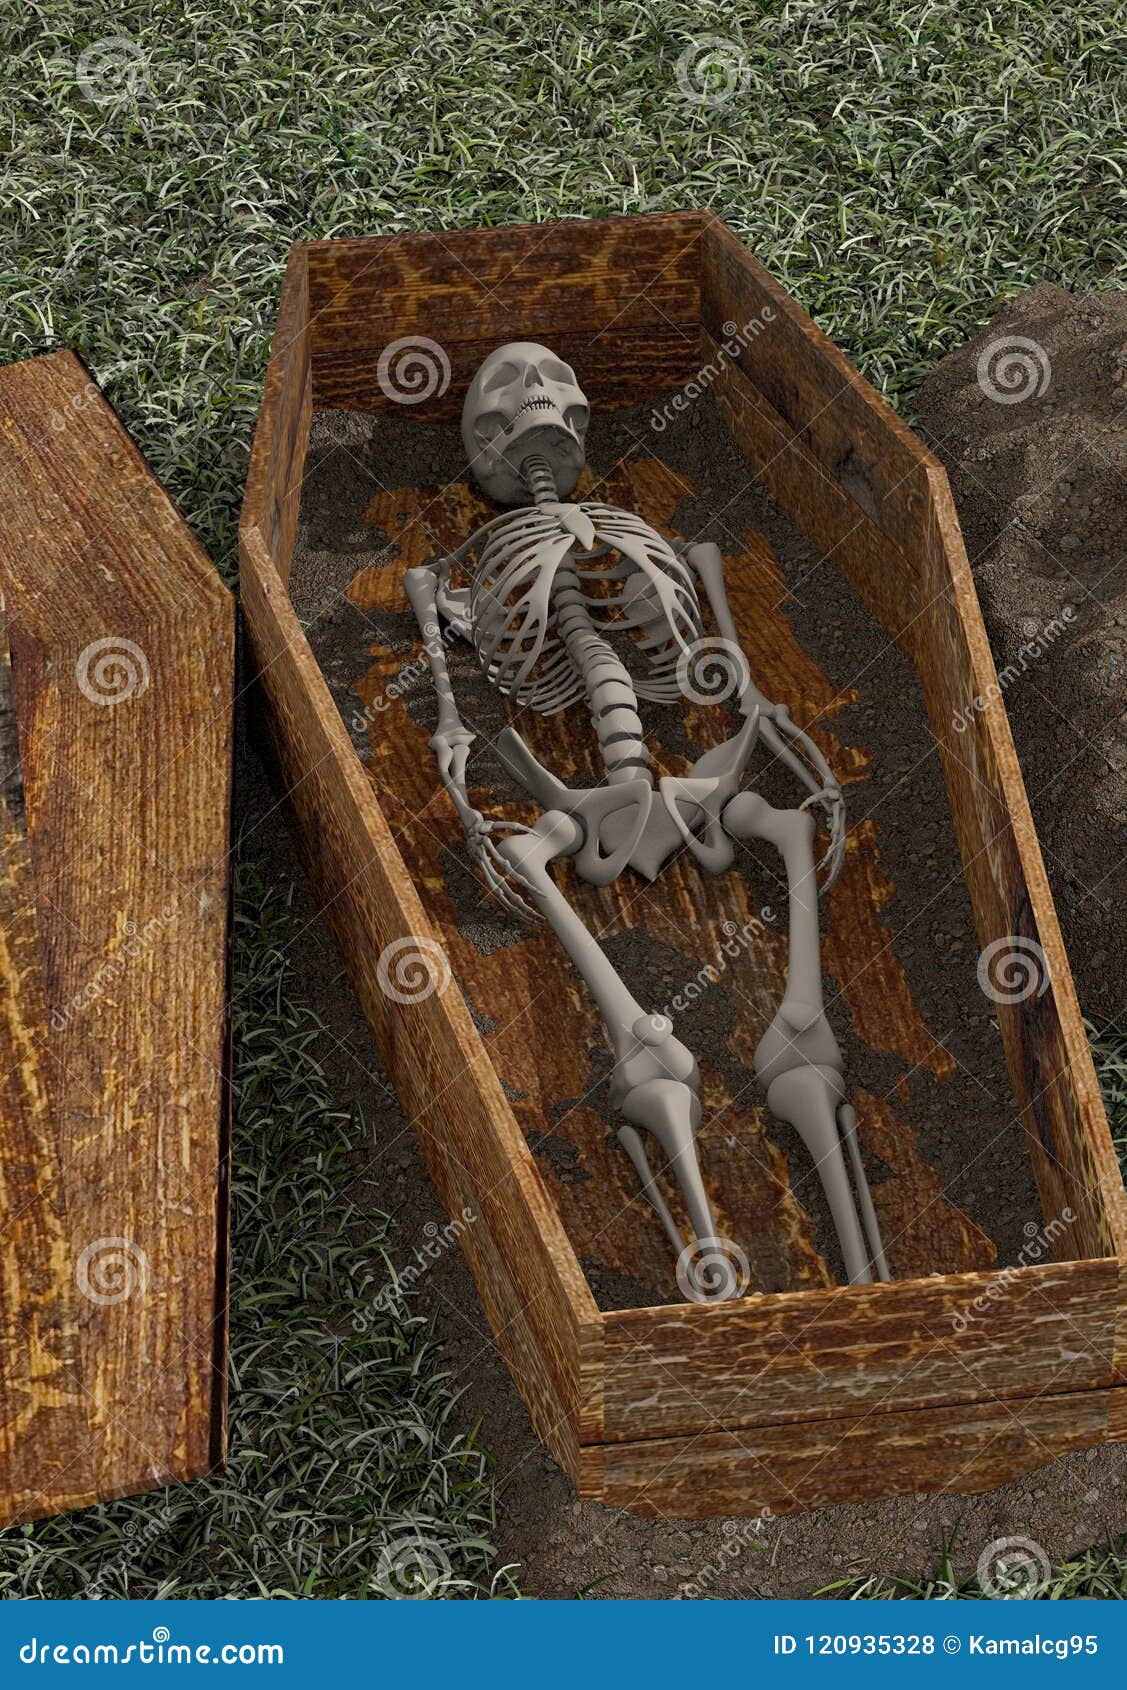 3-Dimensional coffin with skeleton Dia de los Muertos Day of the Dead